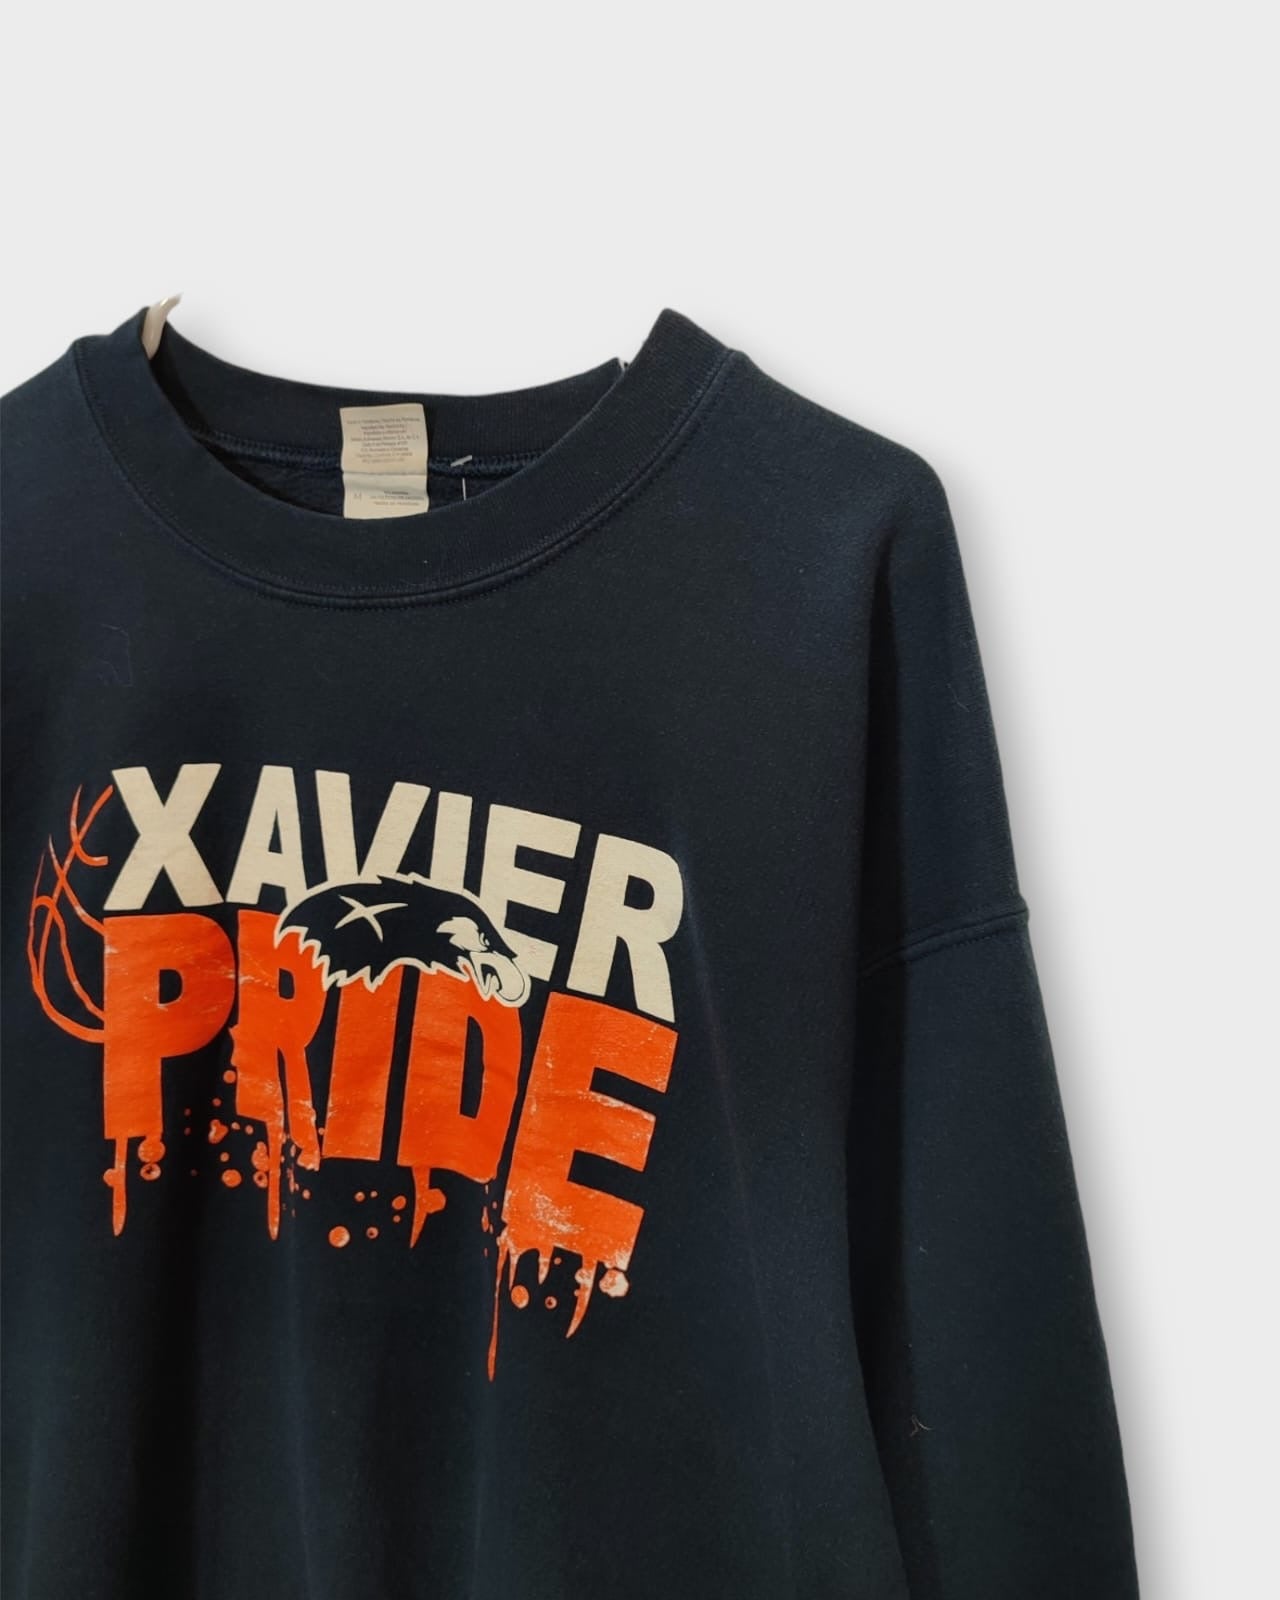 sweat vintage Xavier Pride
 